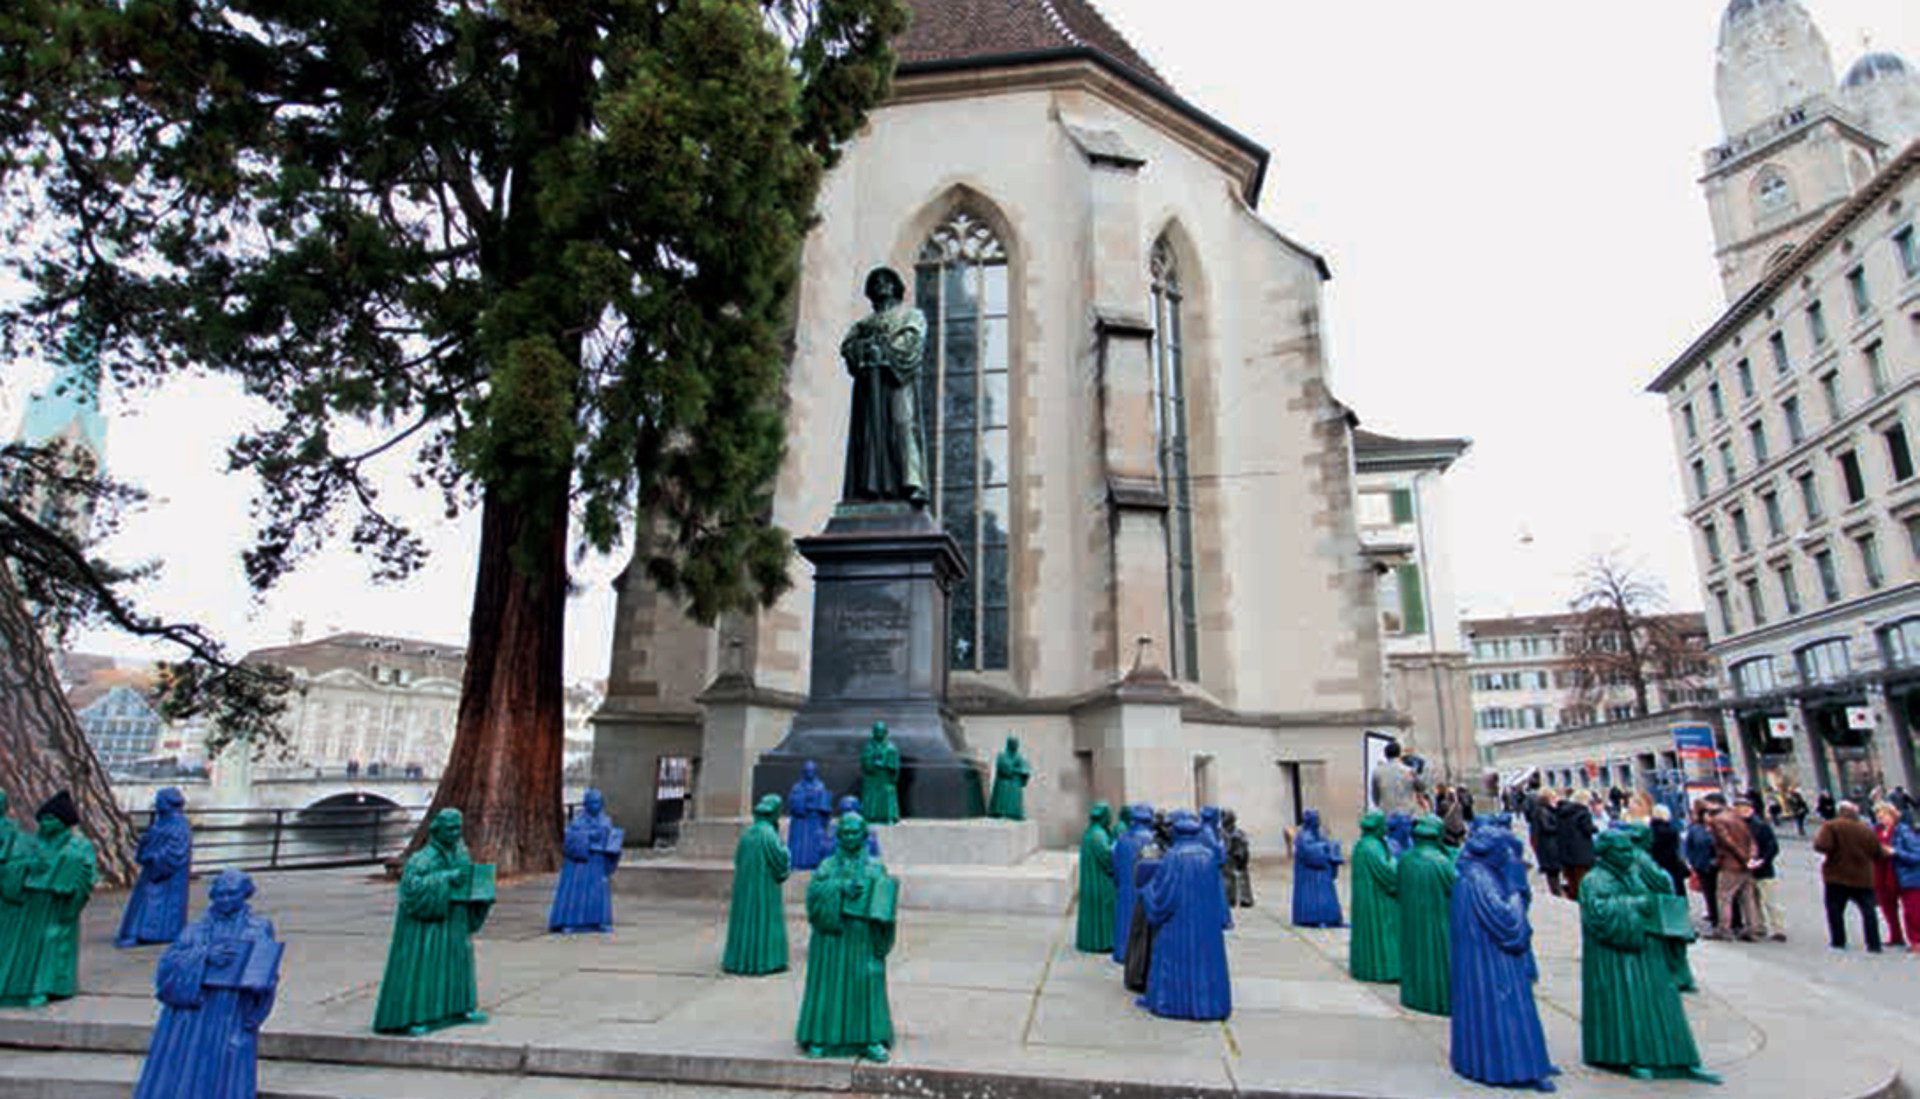 Kunstaktion "Luther trifft Zwingli" 2014 in Zürich